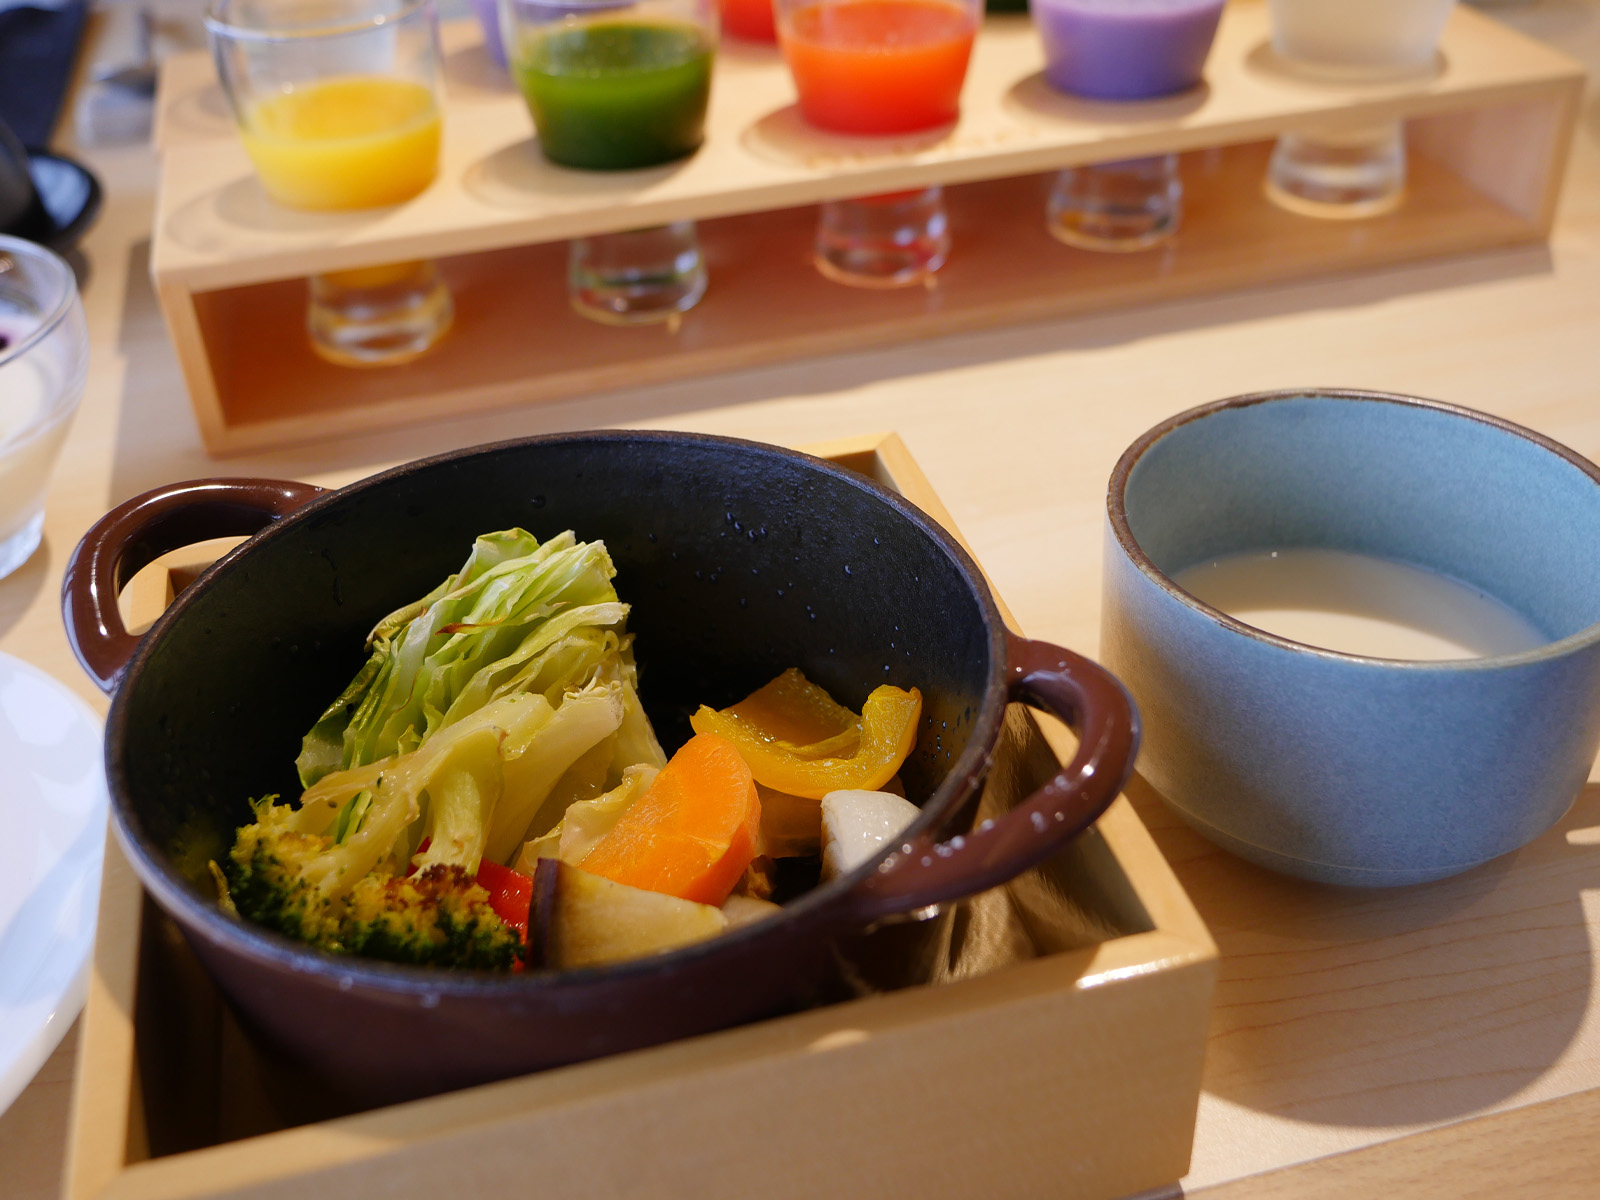 UNO HOTEL内のレストラン「BLUNOUNO」で朝食を食べたよ！／岡山県玉野市